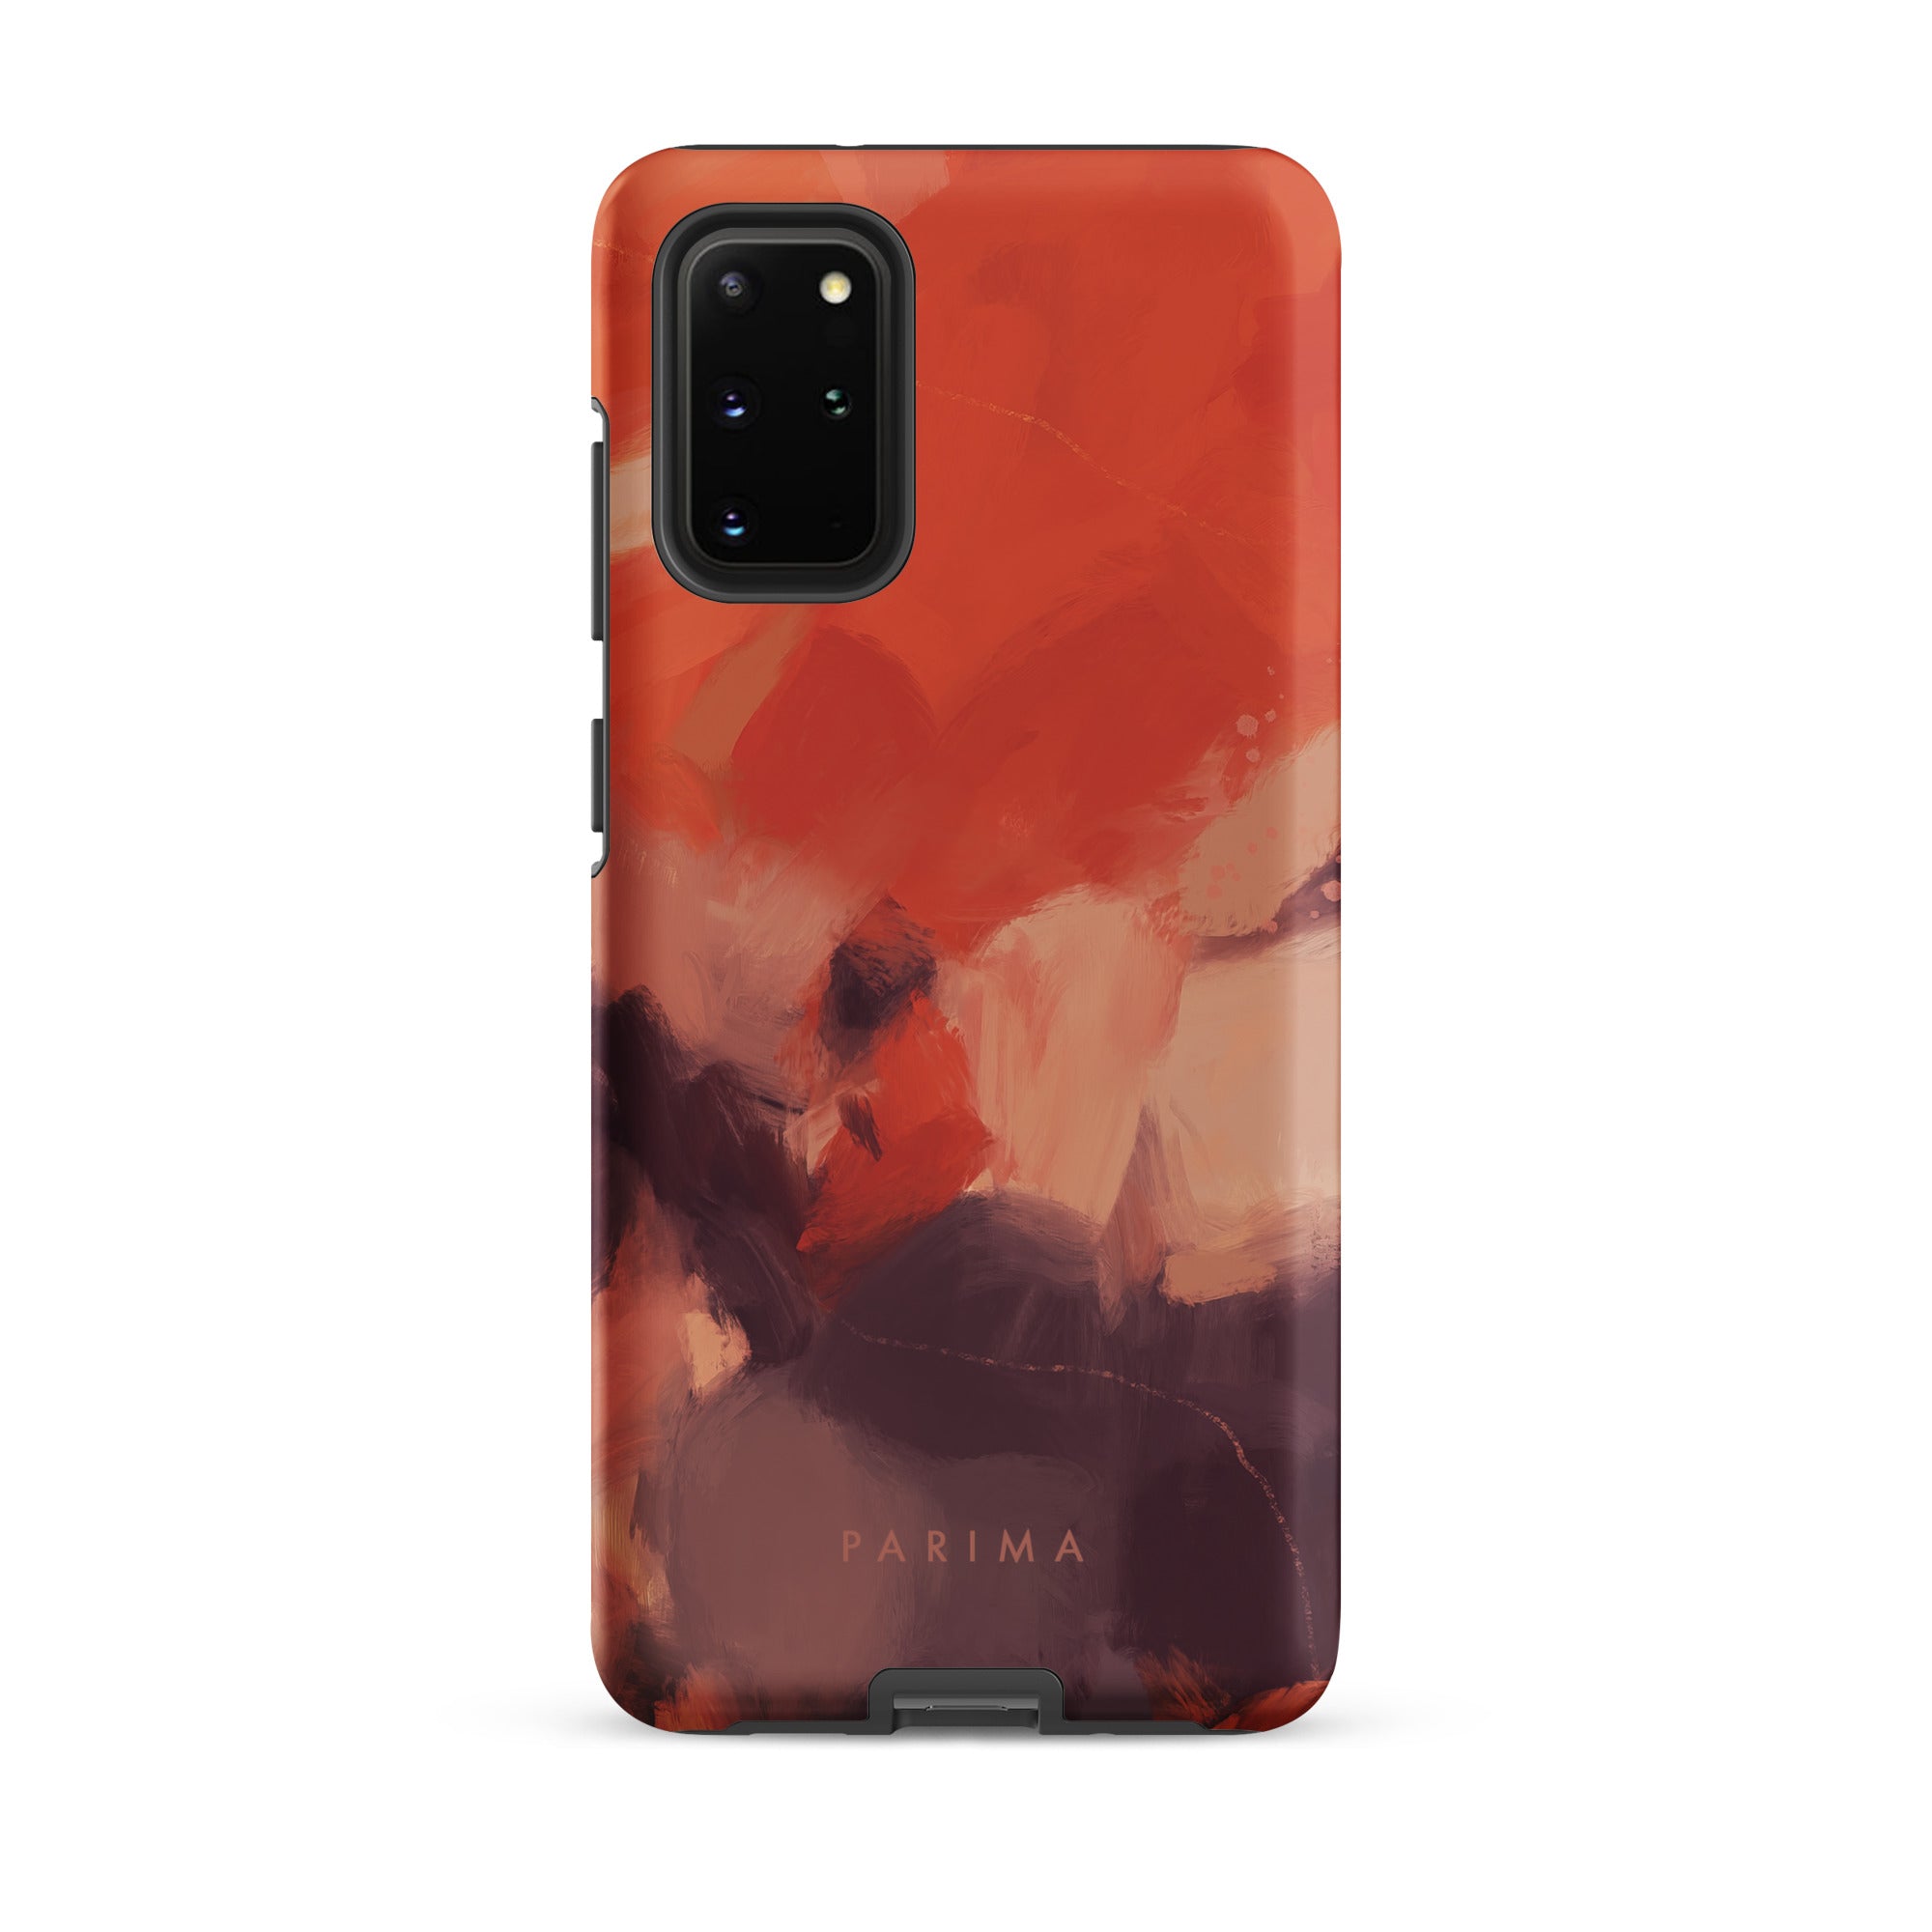 Autumn, orange and purple abstract art on Samsung Galaxy S20 Plus tough case by Parima Studio